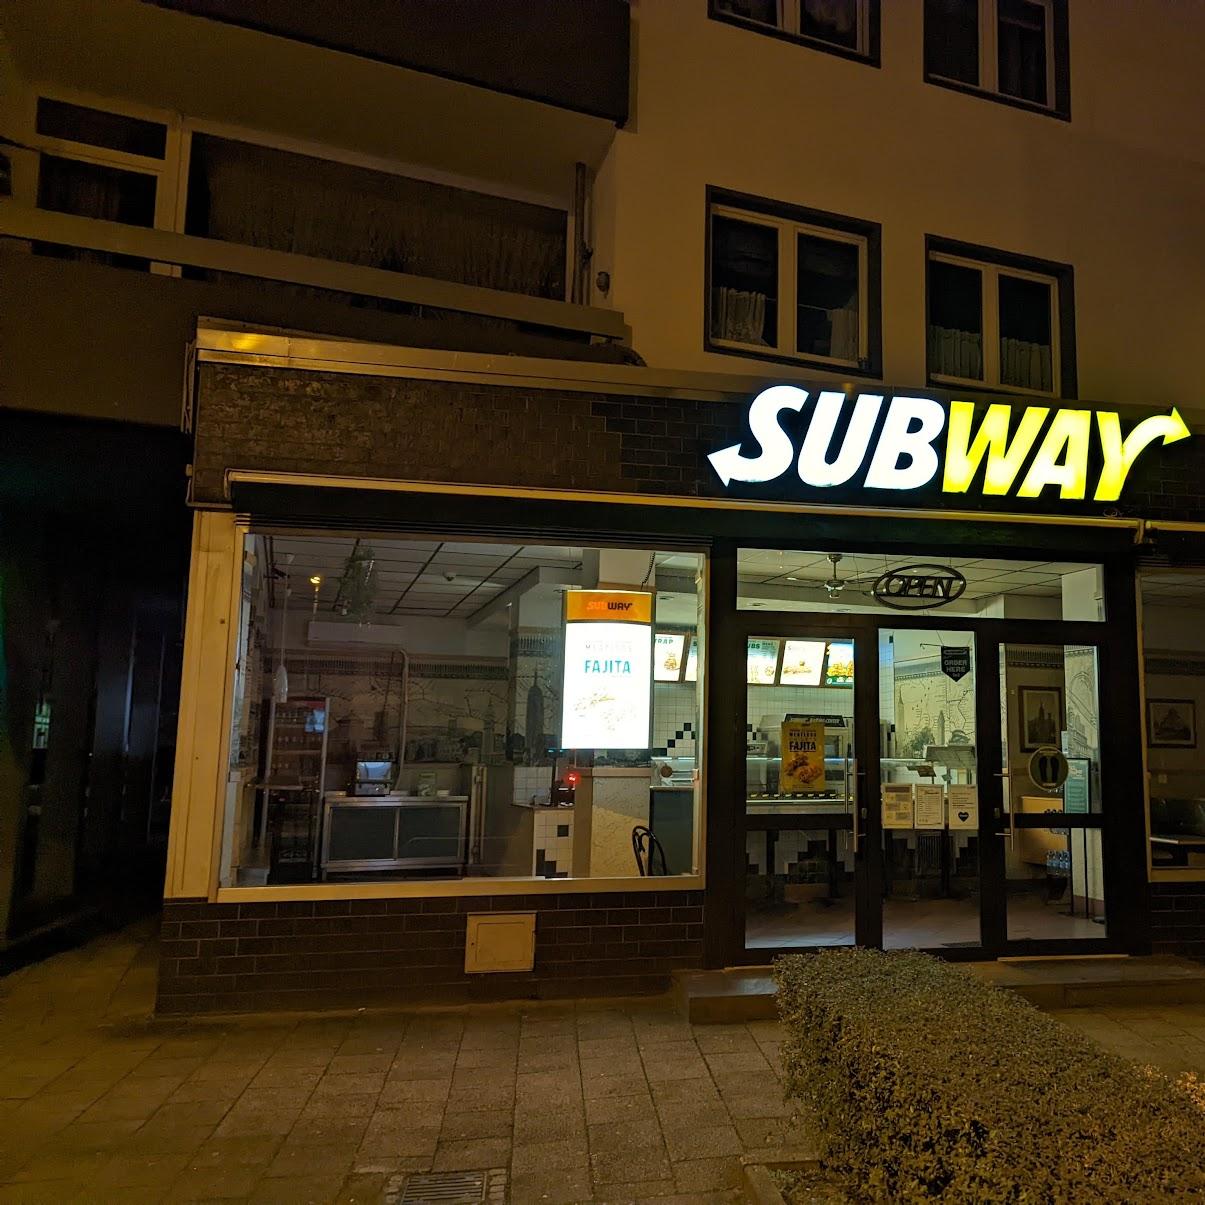 Restaurant "Subway" in Frankfurt am Main